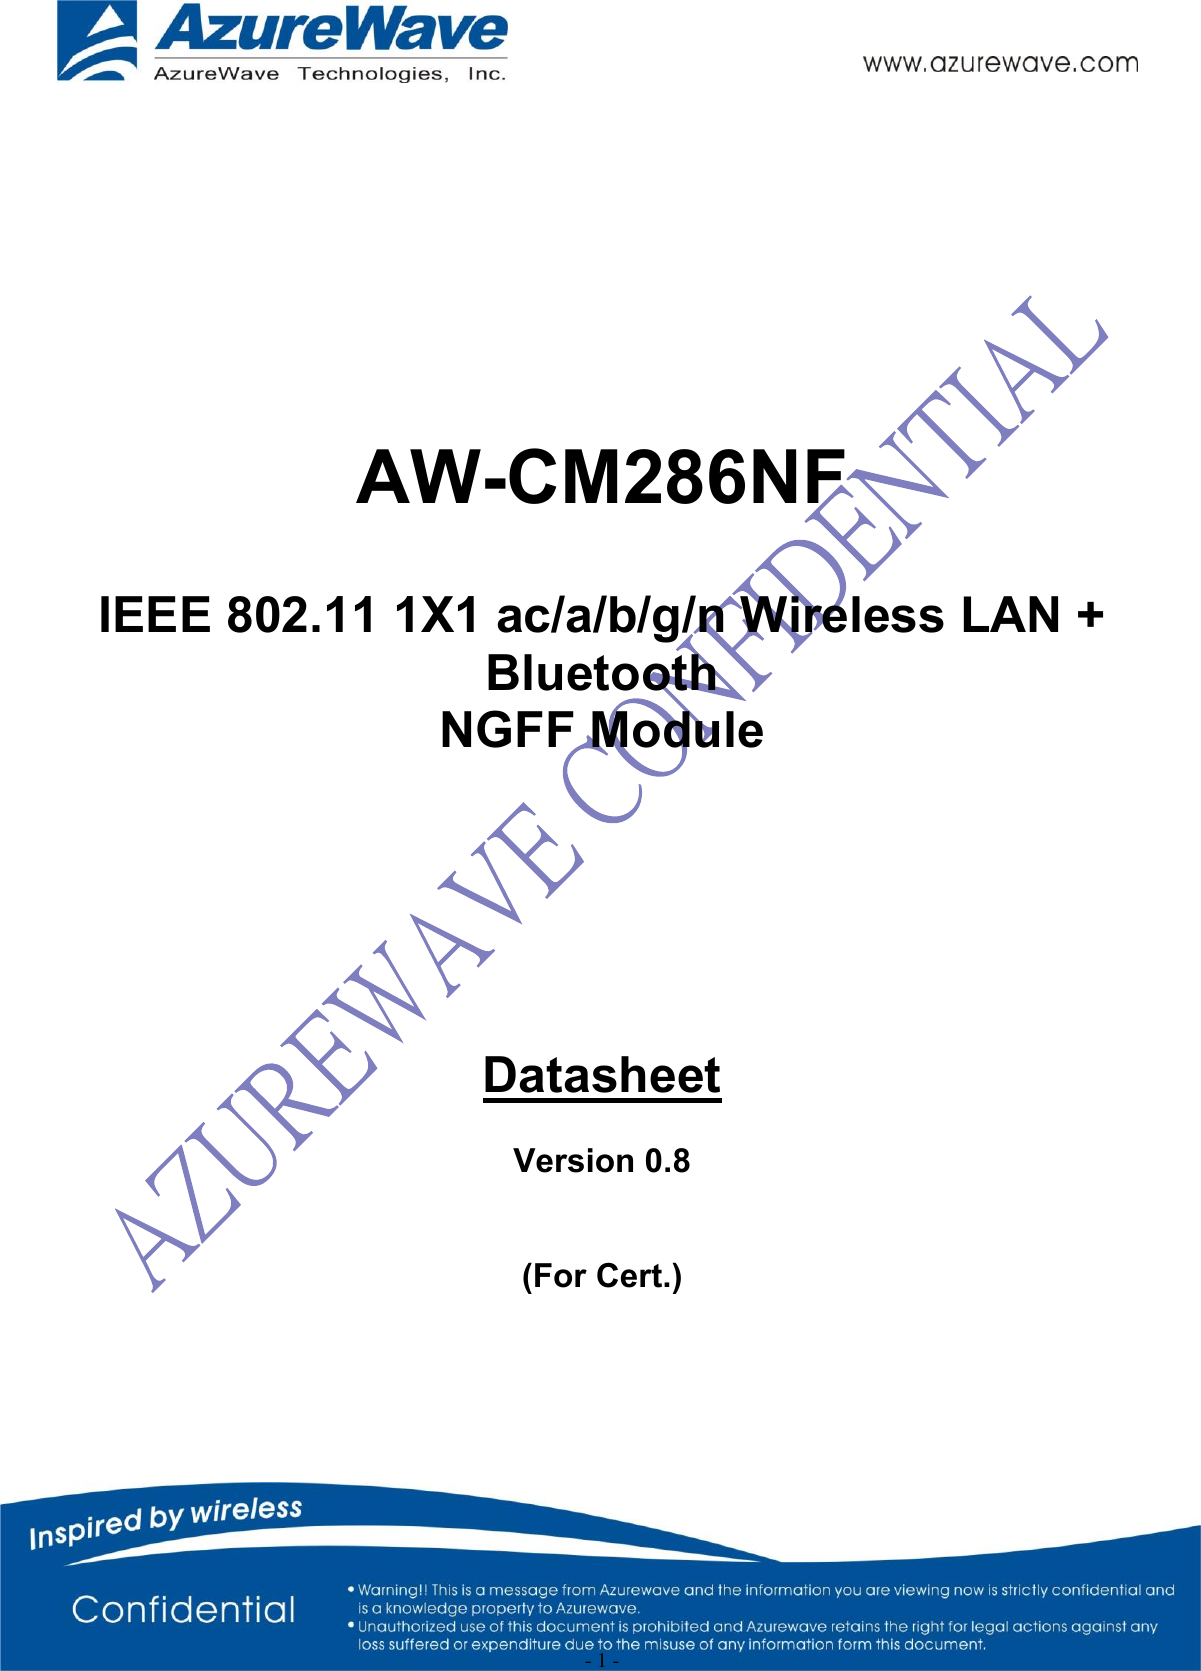  - 1 -      AW-CM286NF  IEEE 802.11 1X1 ac/a/b/g/n Wireless LAN + Bluetooth  NGFF Module       Datasheet  Version 0.8   (For Cert.)      